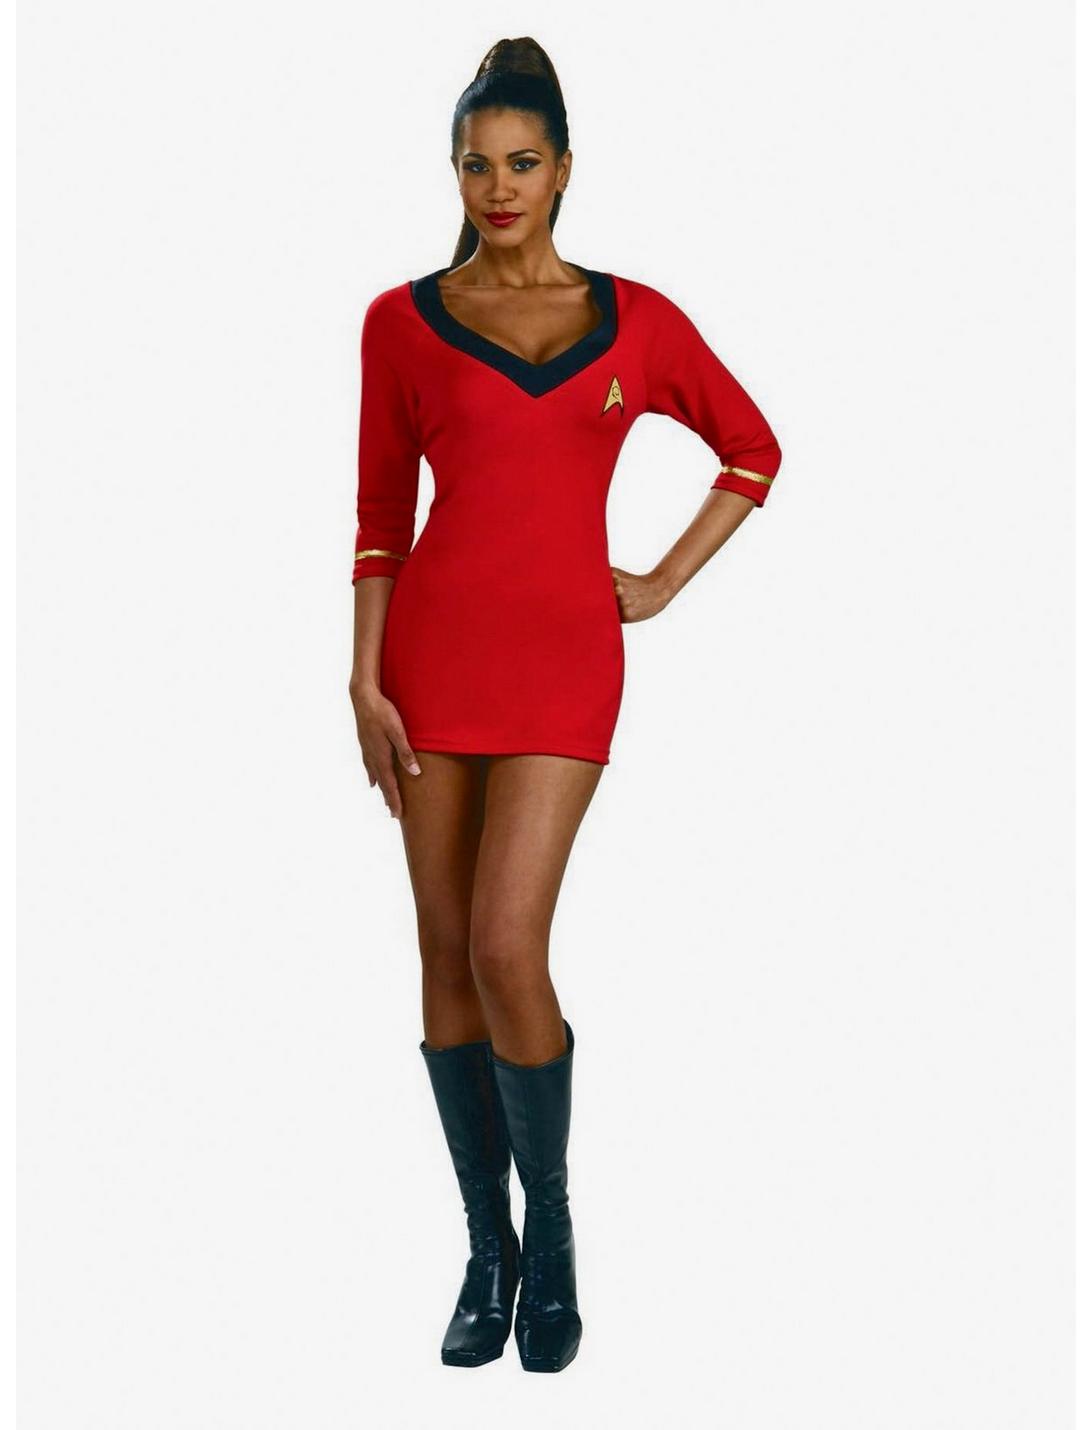 Star Trek Red Dress Costume, RED, hi-res